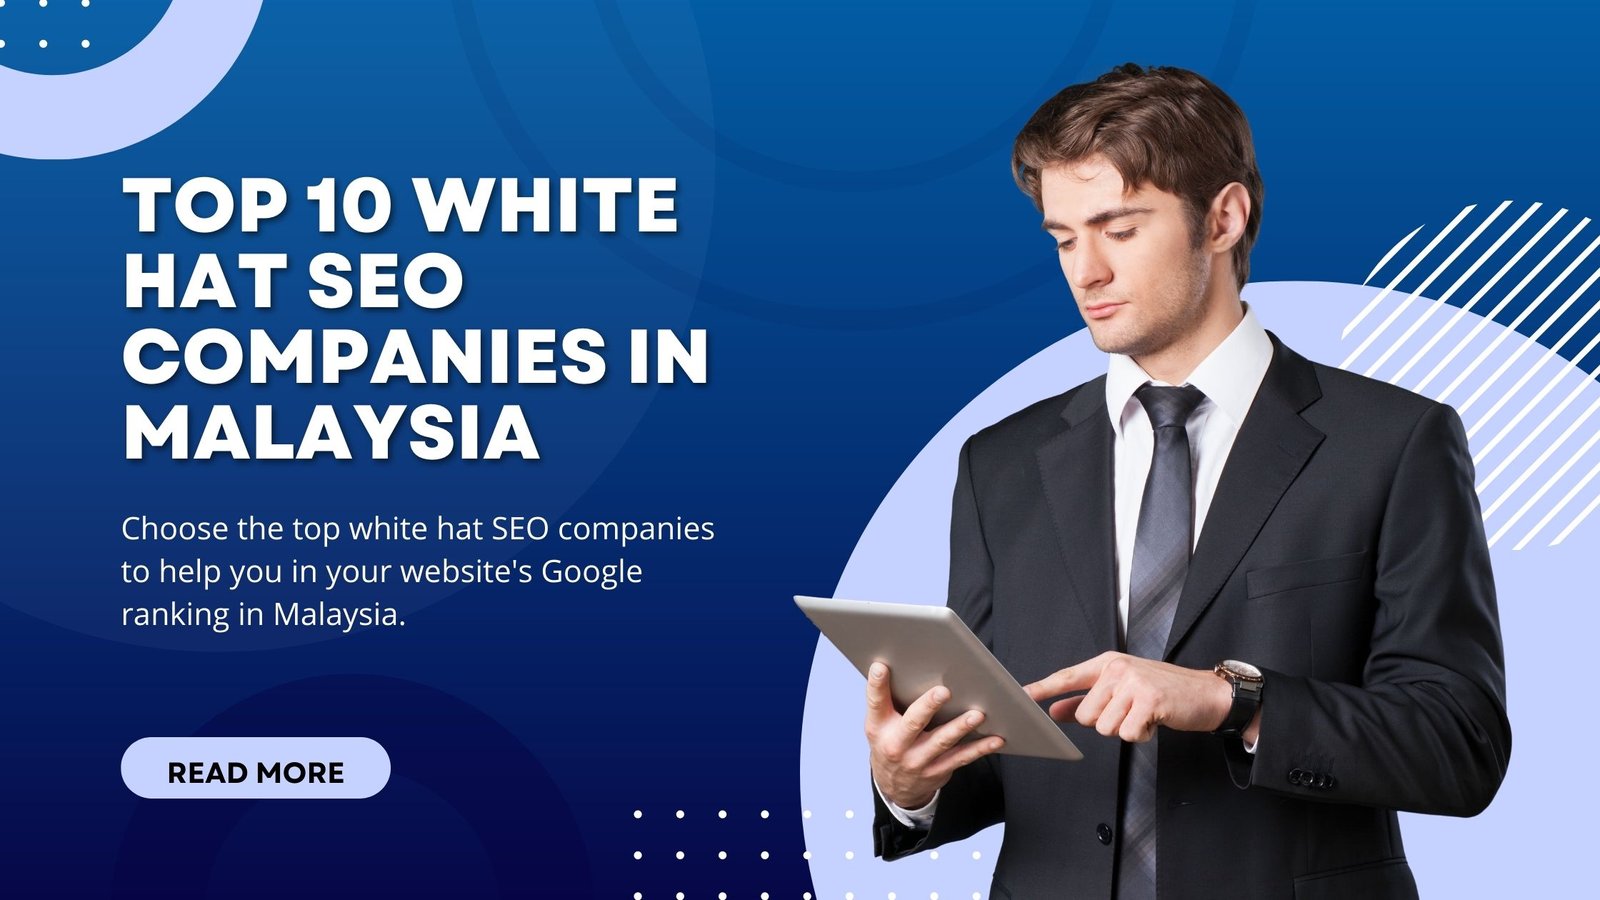 Top 10 White Hat SEO Companies in Malaysia